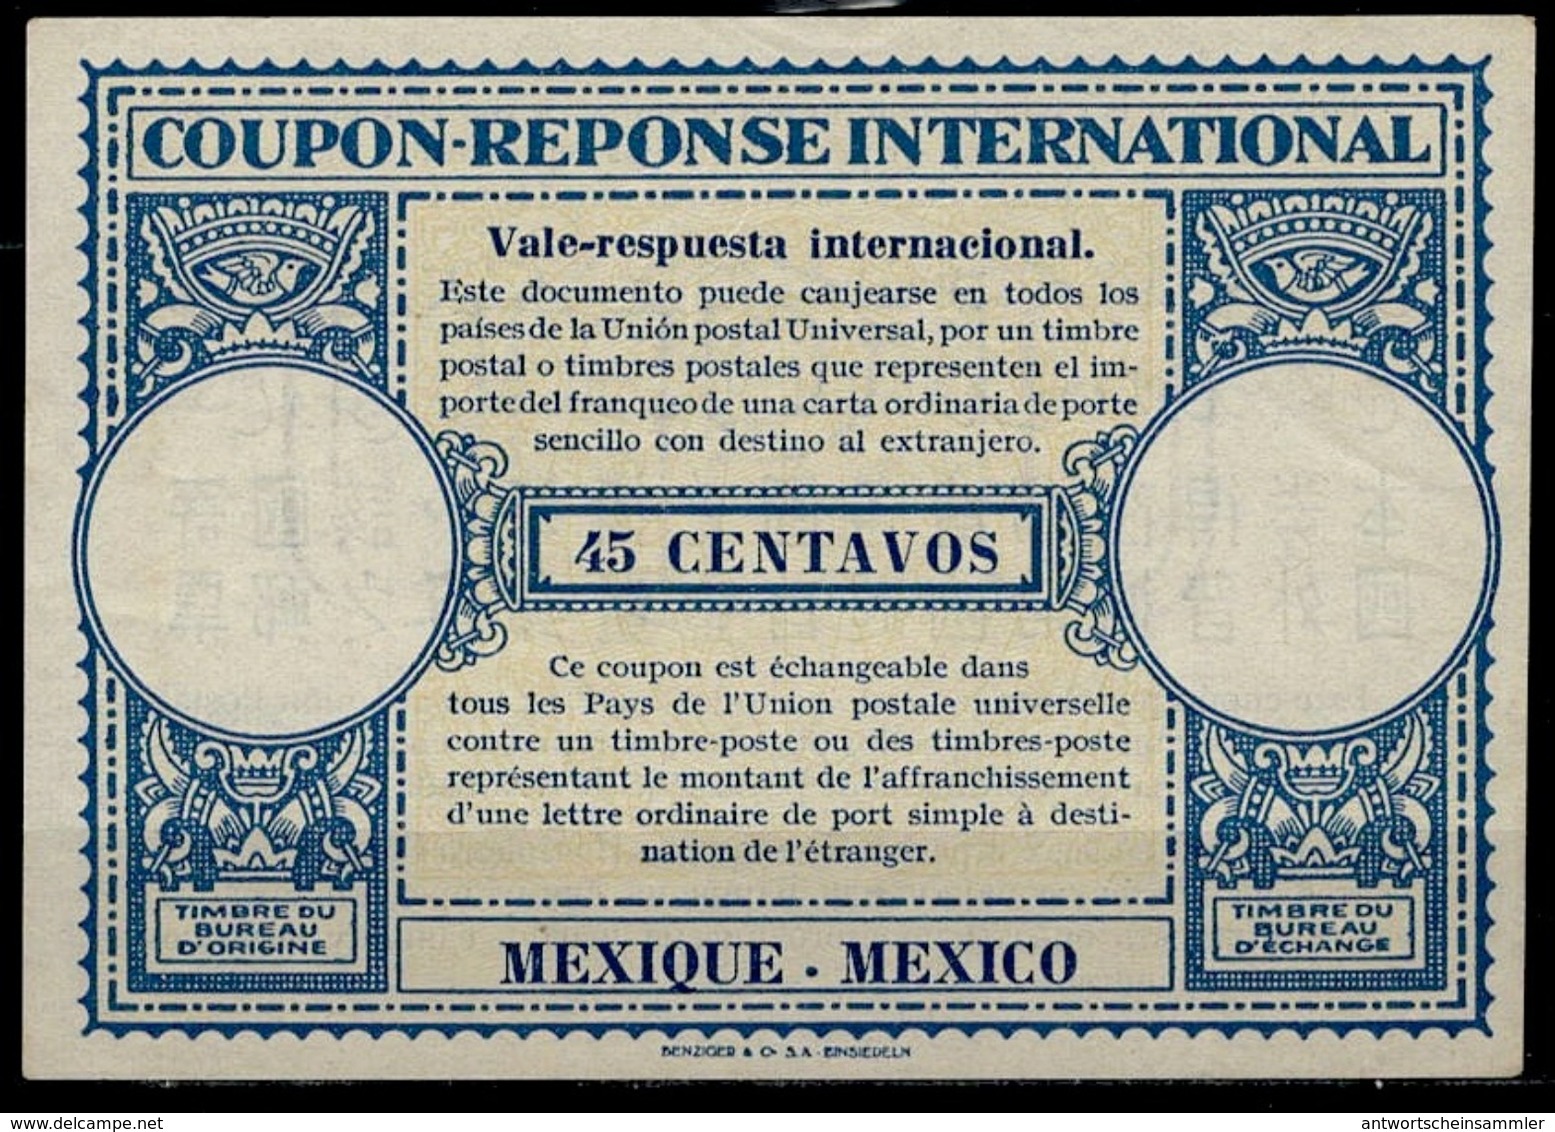 MEXICO / MEXIQUE Ca 1948, London Type XVr 45 CENTAVOS International Reply Coupon Reponse Antwortschein IAS IRC Mint ** - Mexiko